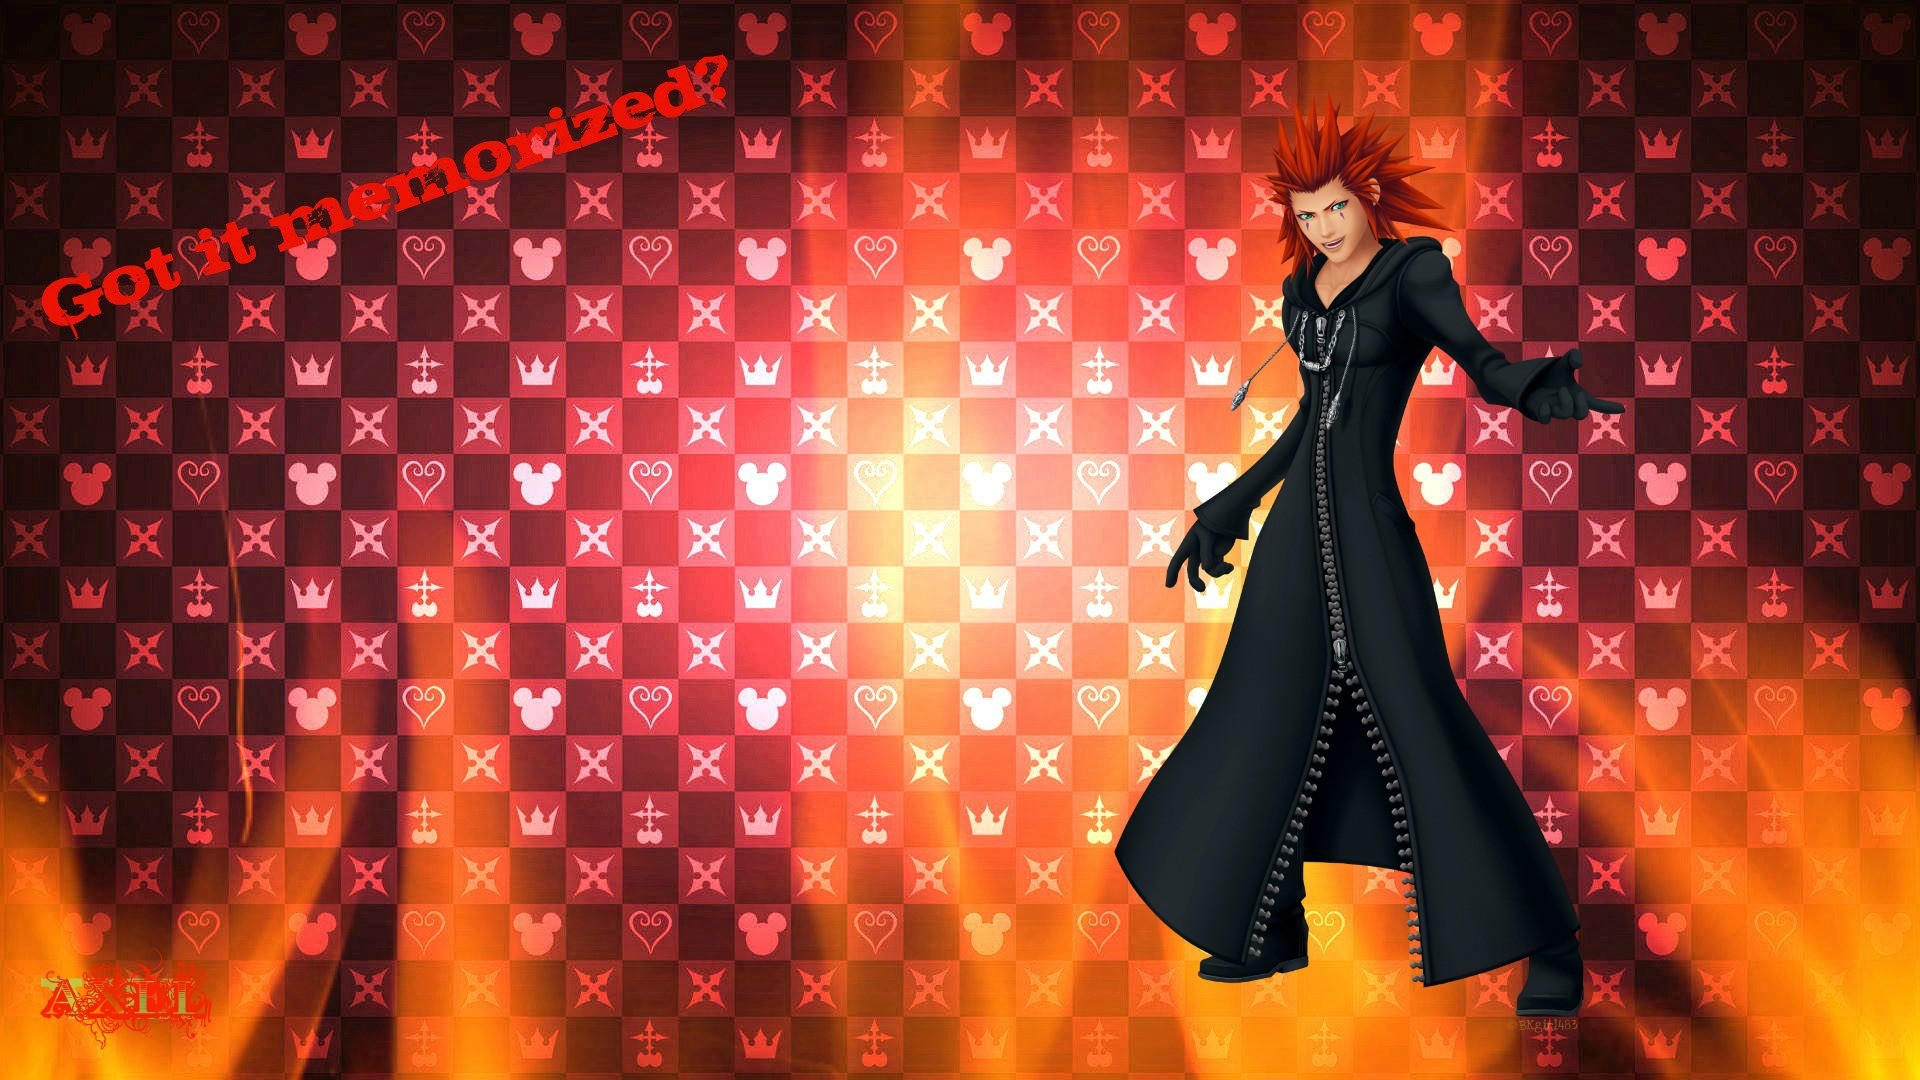 Axel Kingdom Hearts Wallpaper (70+ images)
